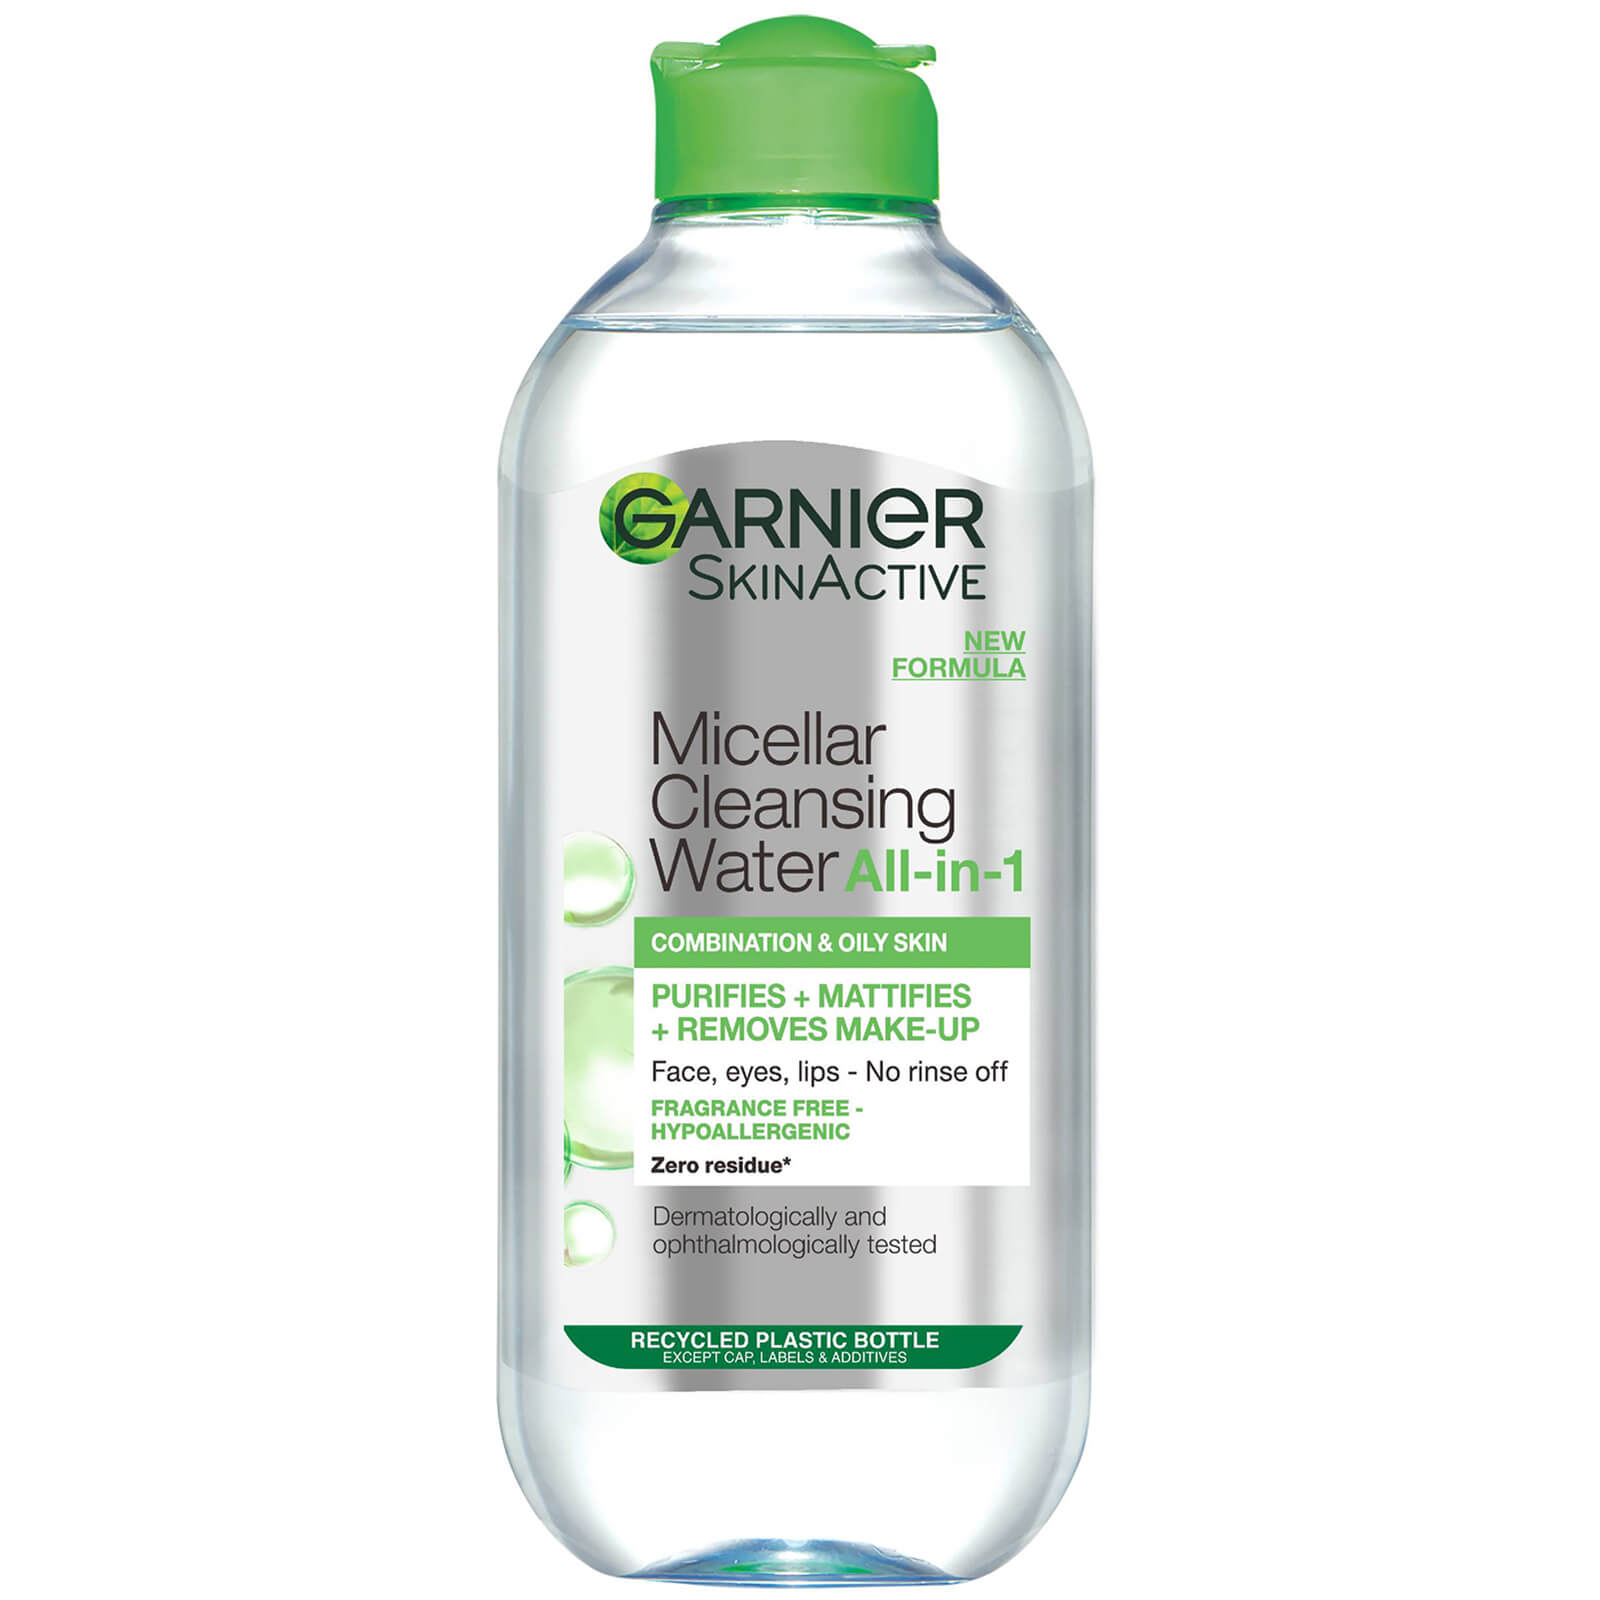 Garnier Skin Naturals acqua micellare detergente per pelli miste e sensibili (400 ml)